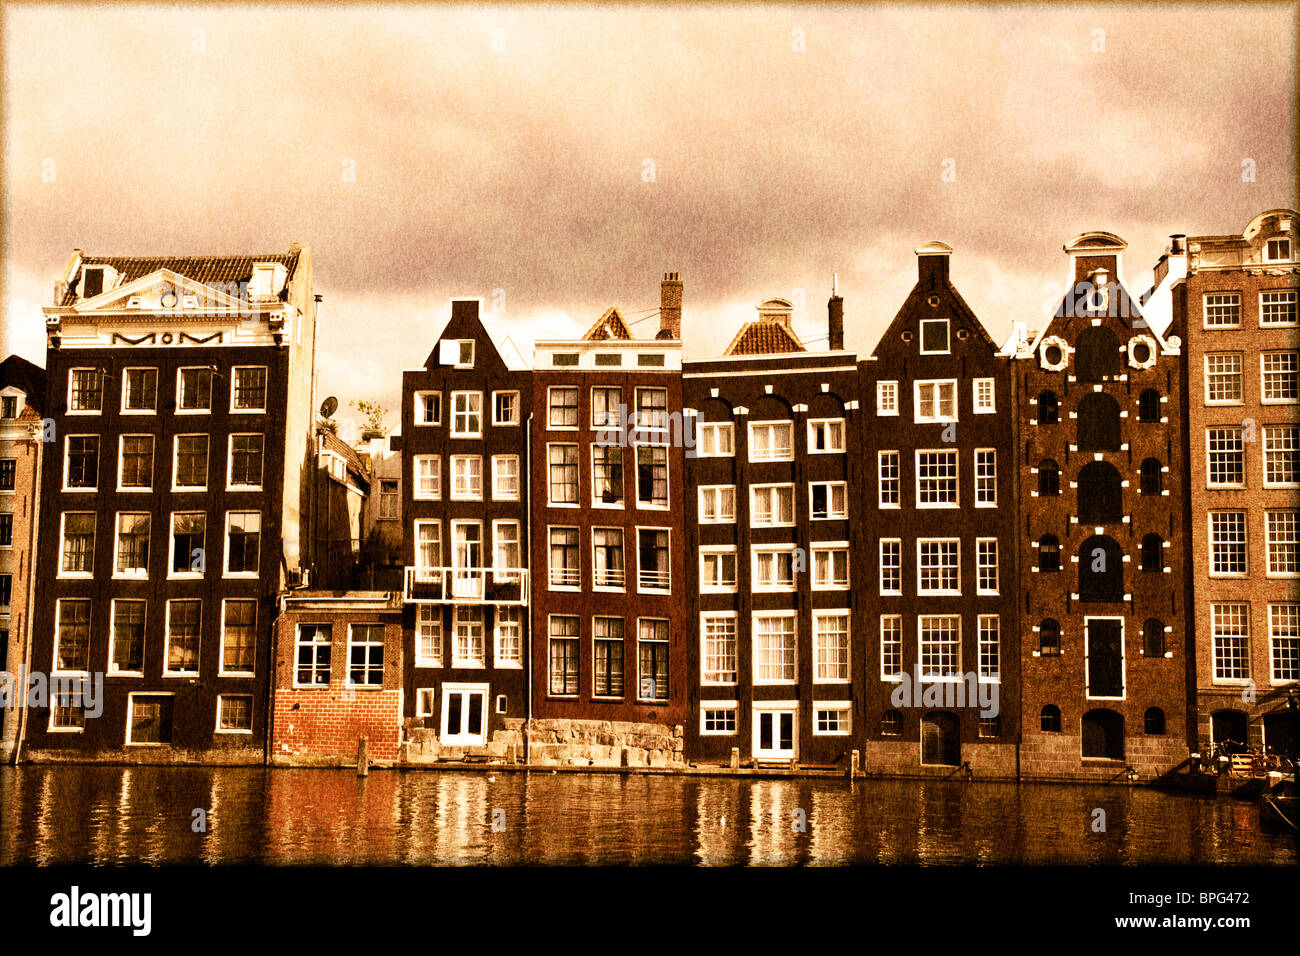 Amsterdam canal case con un vintage look seppia Foto Stock